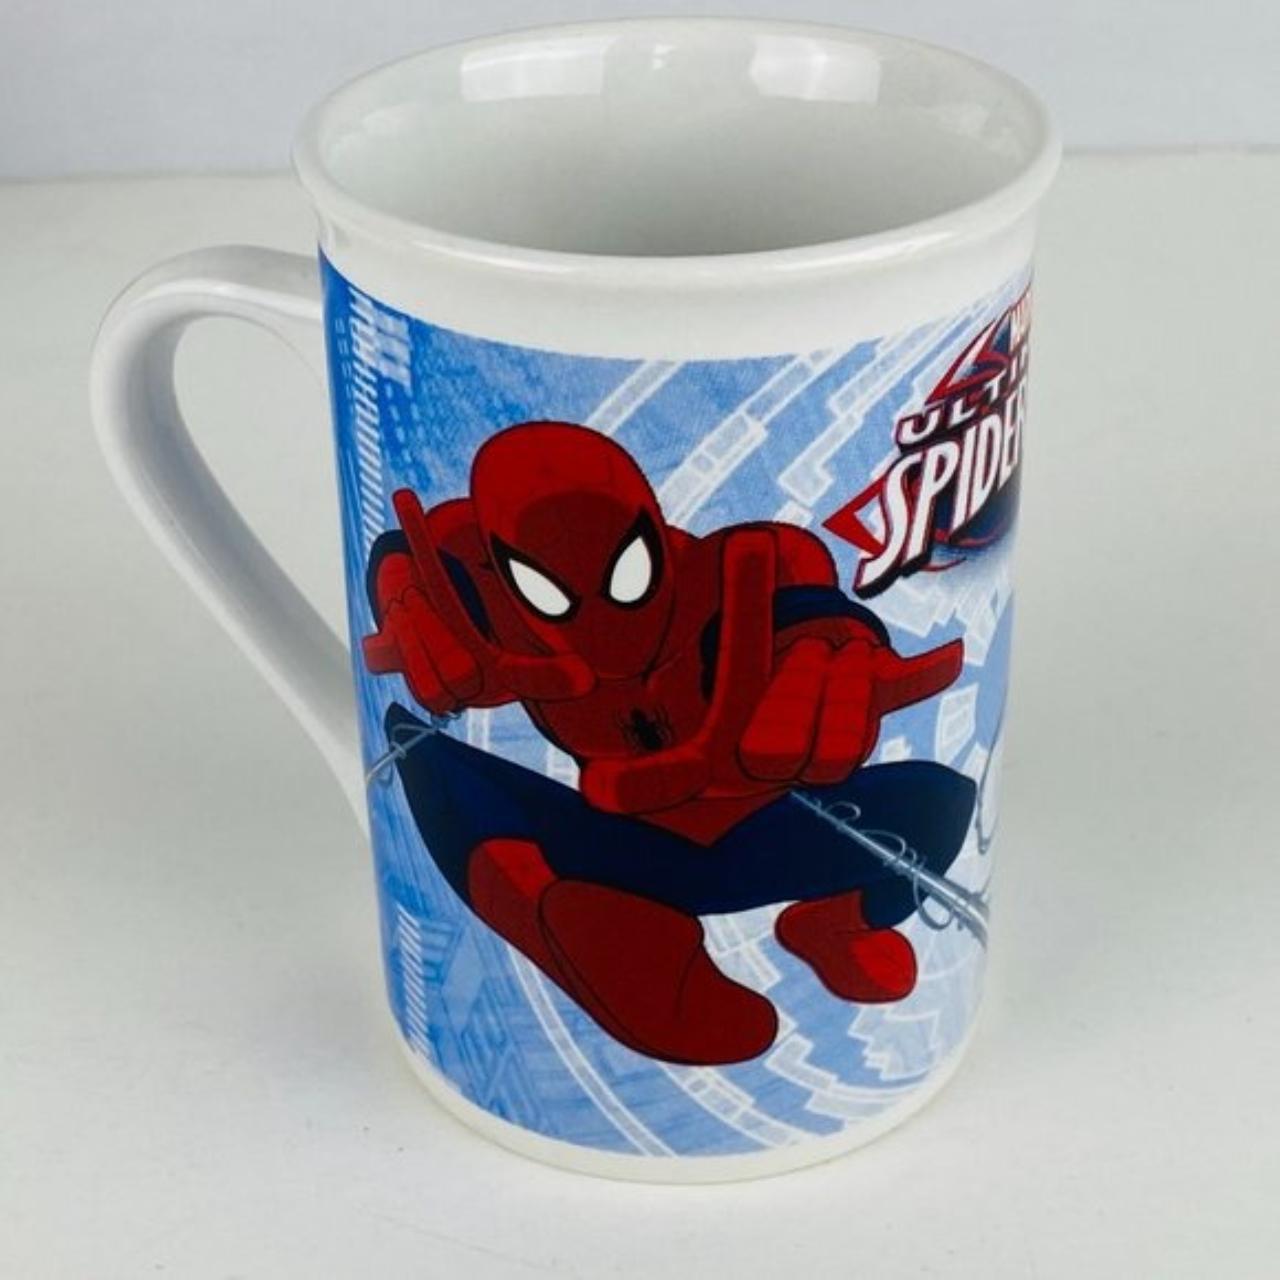 Marvel Spiderman Character Coffee Mug 2014 4” tall - Depop